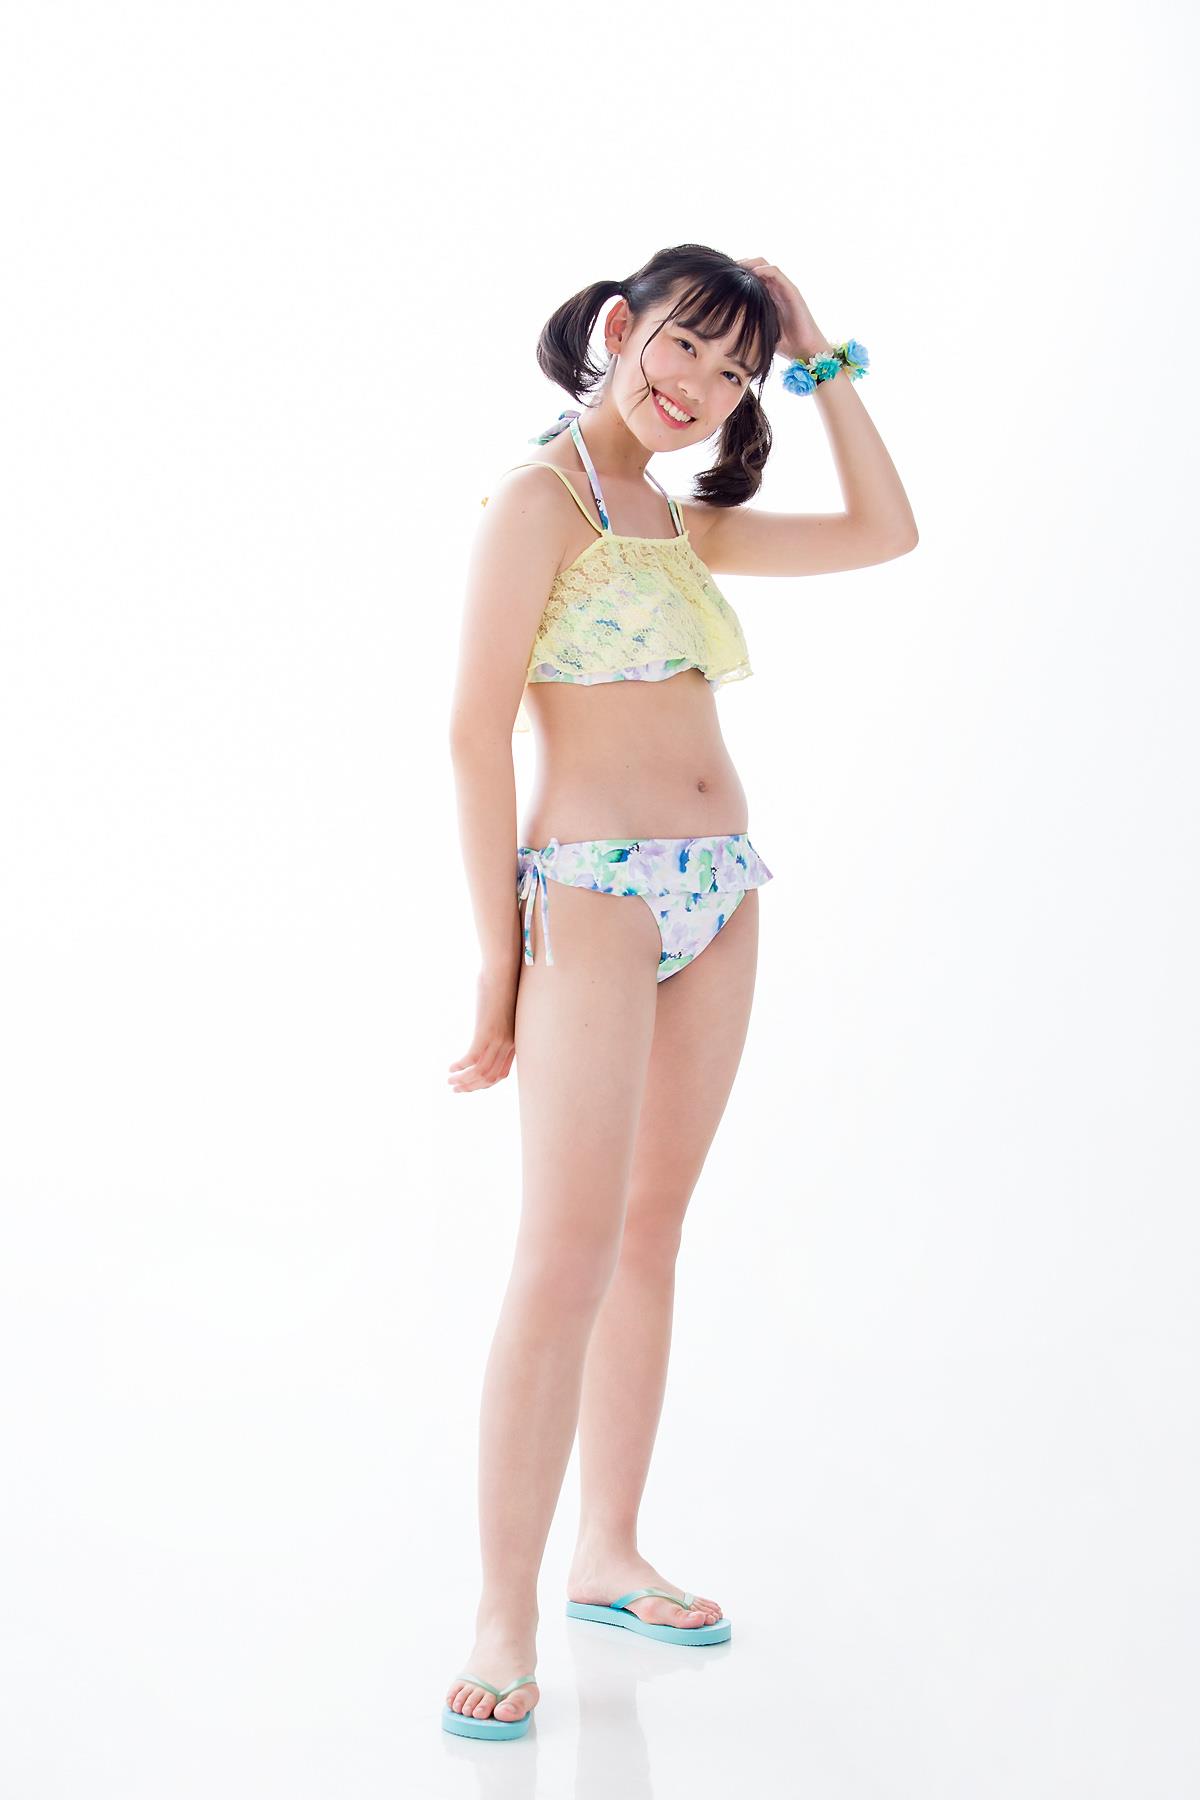 Minisuka.tv Sarina Kashiwagi 柏木さりな Premium Gallery 2.8 - 9.jpg